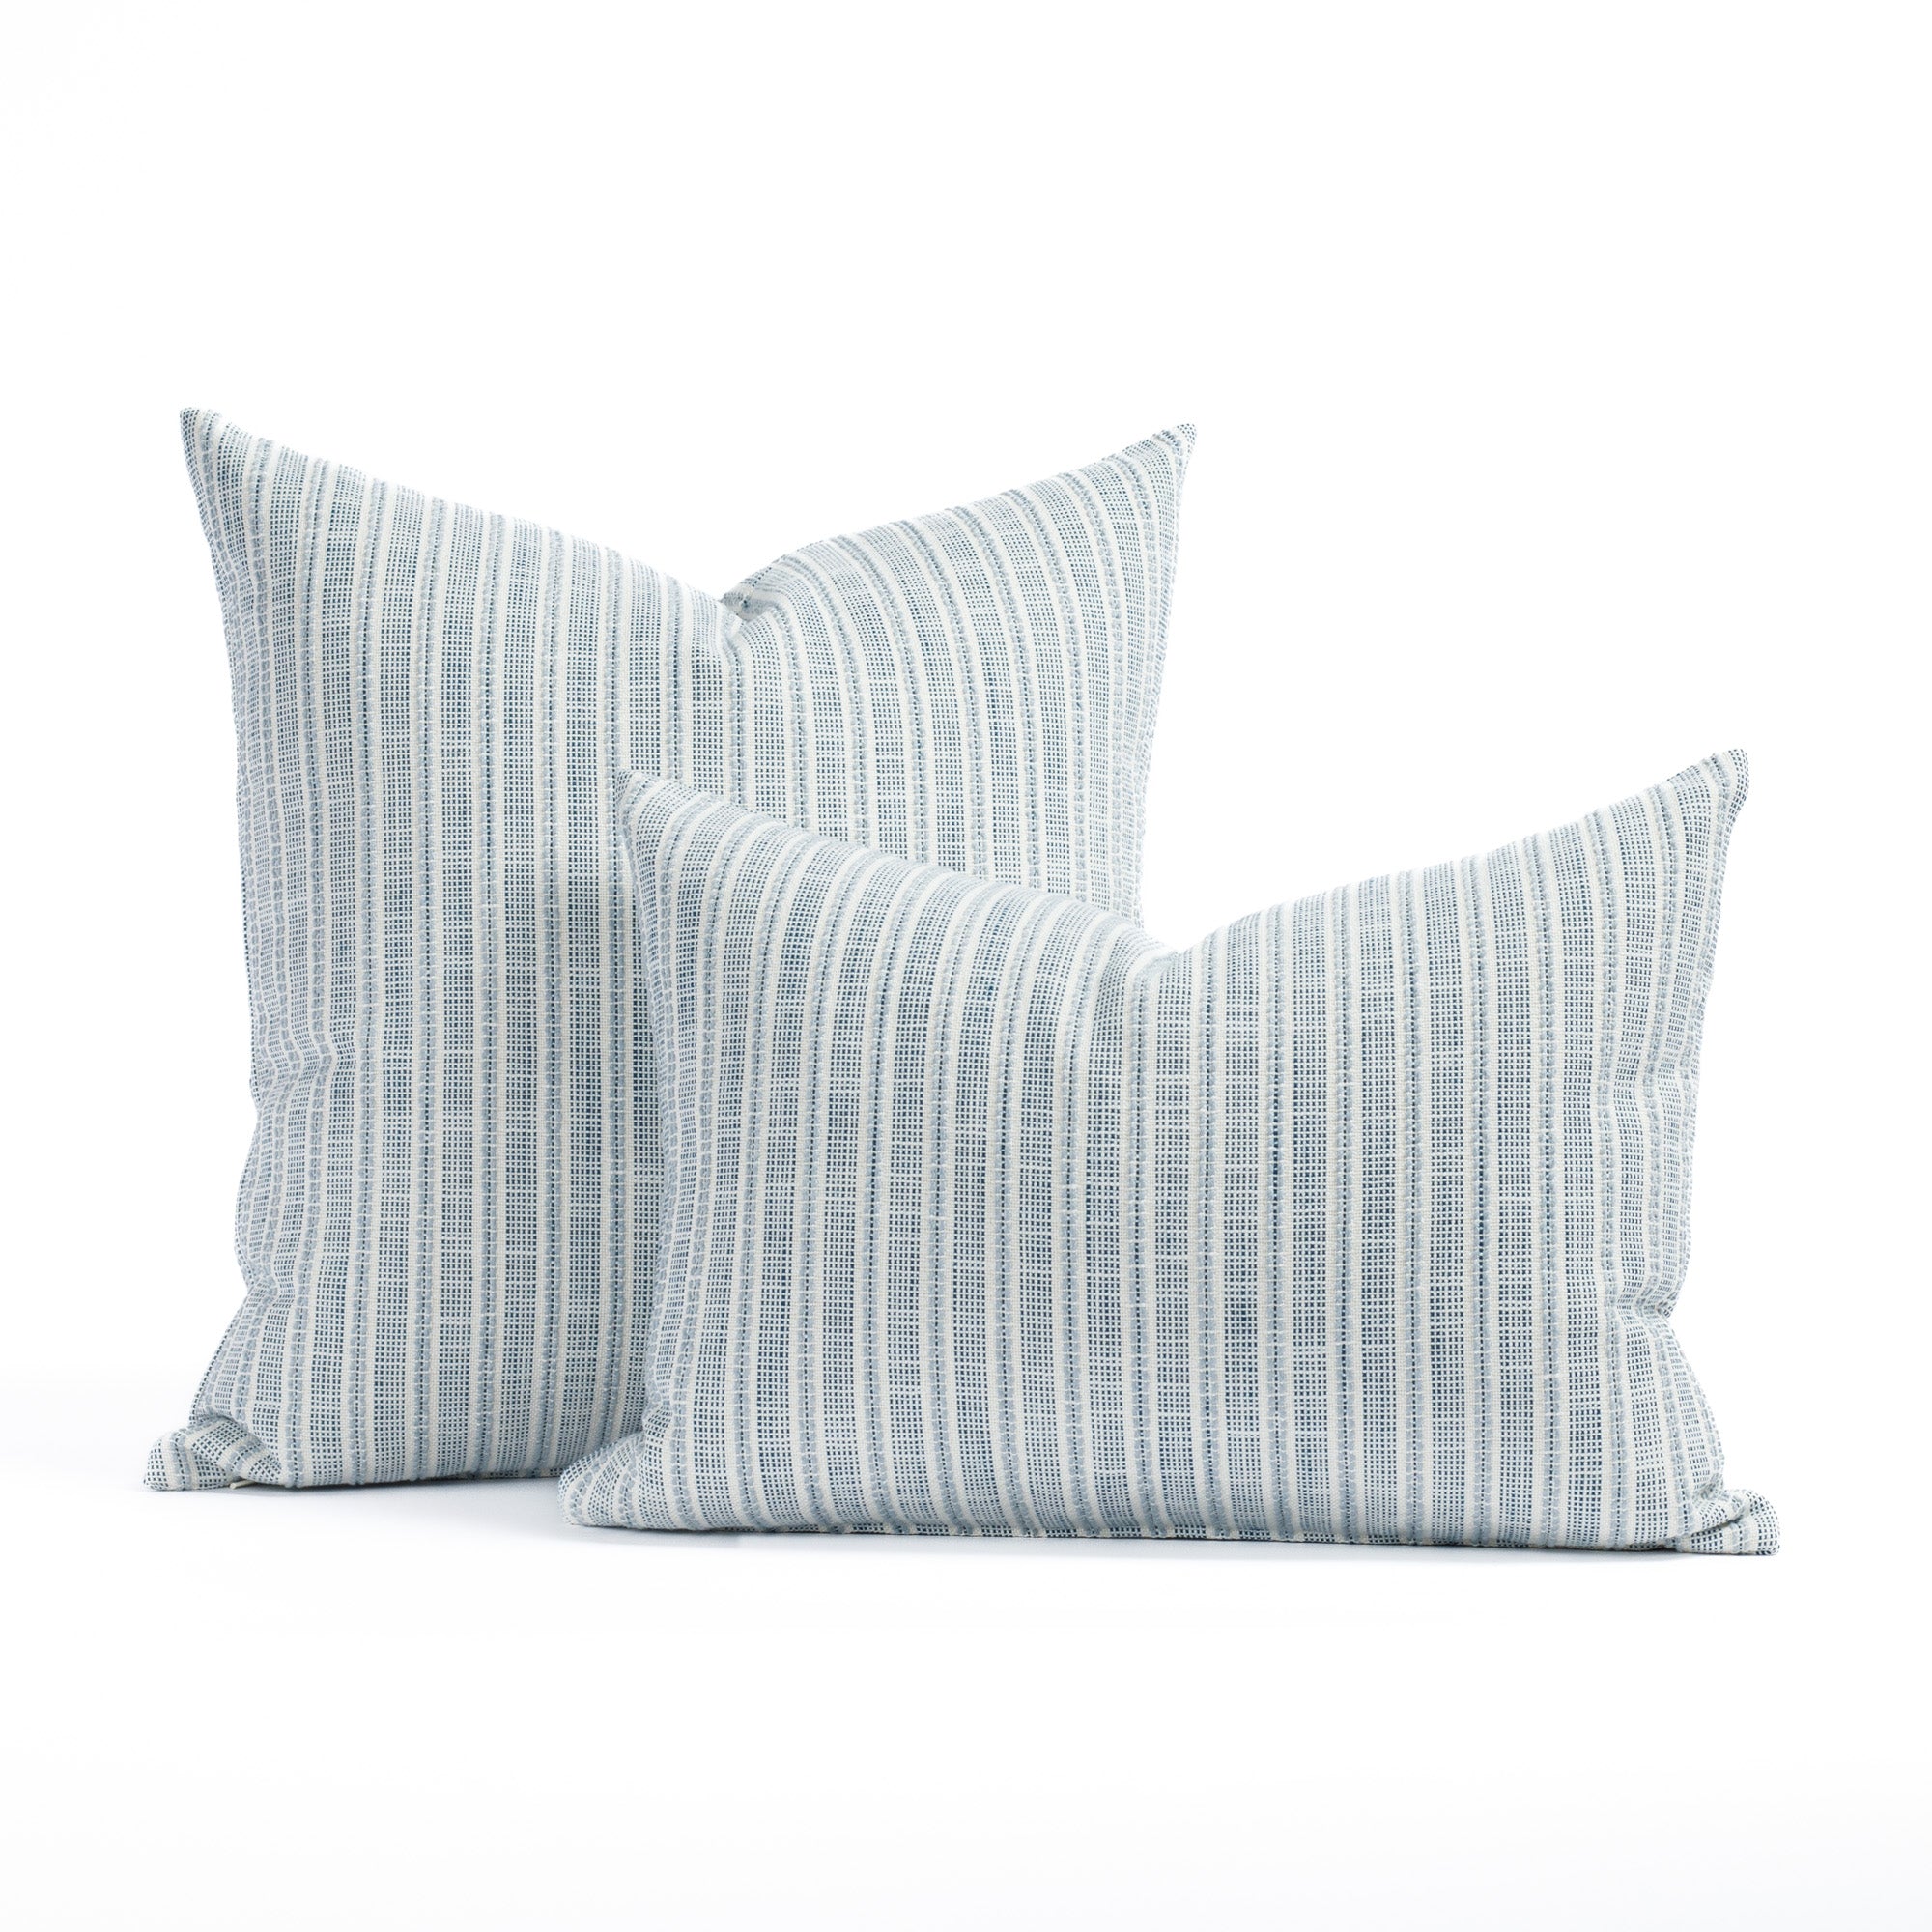 Amalfi Stripe Indigo blue and white stripe outdoor Tonic Living throw pillow in 20x20 and 14x20 lumbar sizes